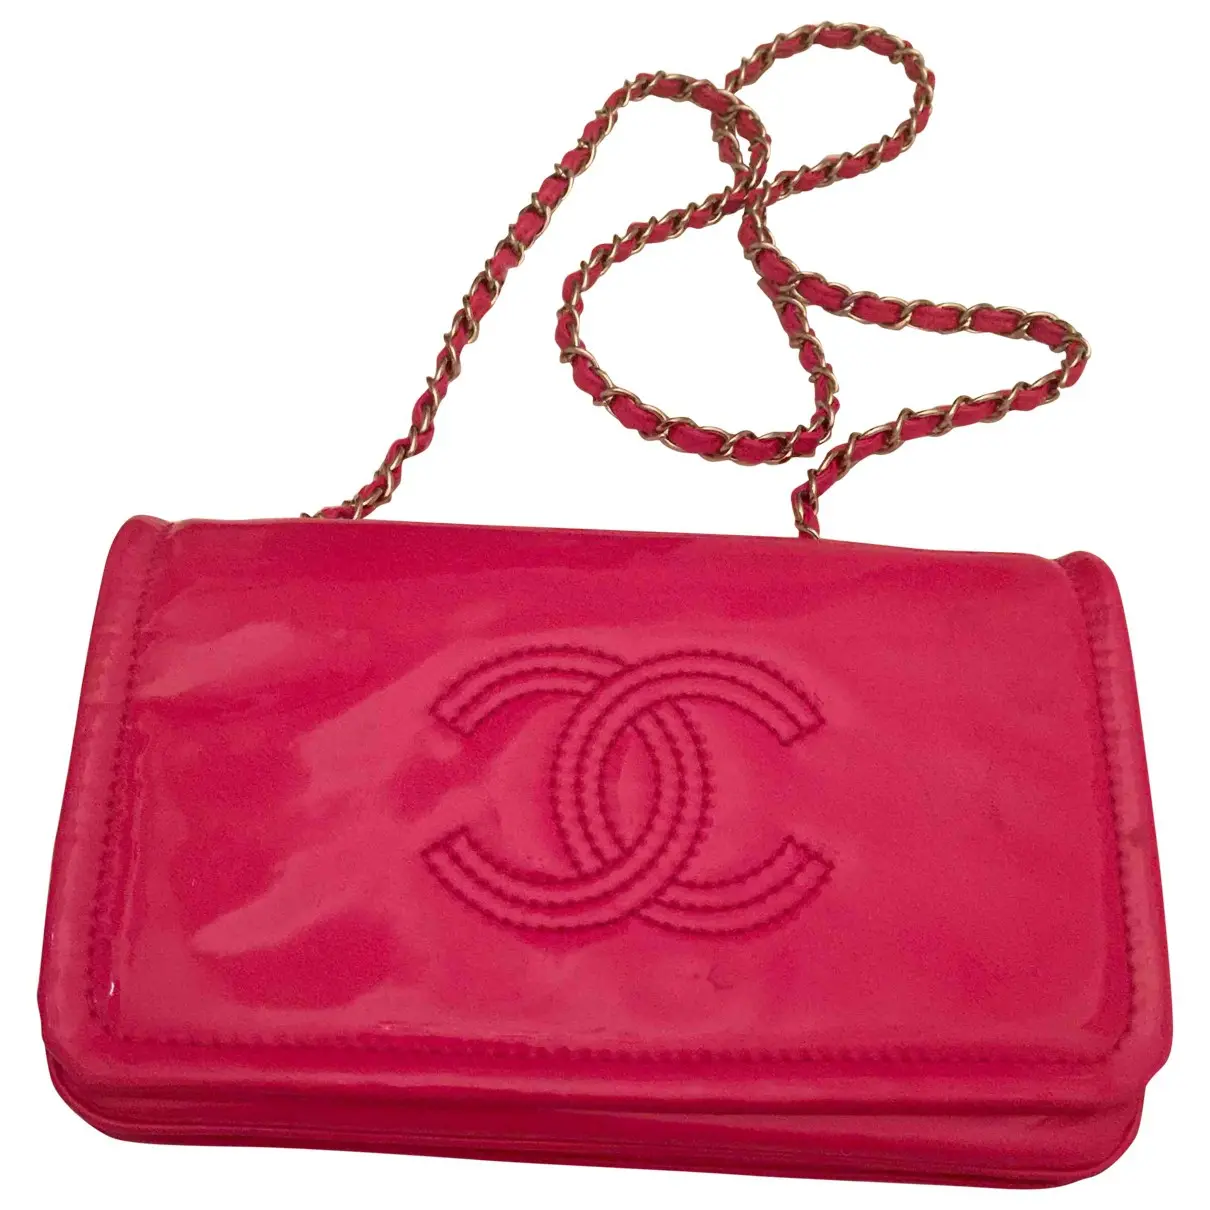 Patent leather crossbody bag Chanel